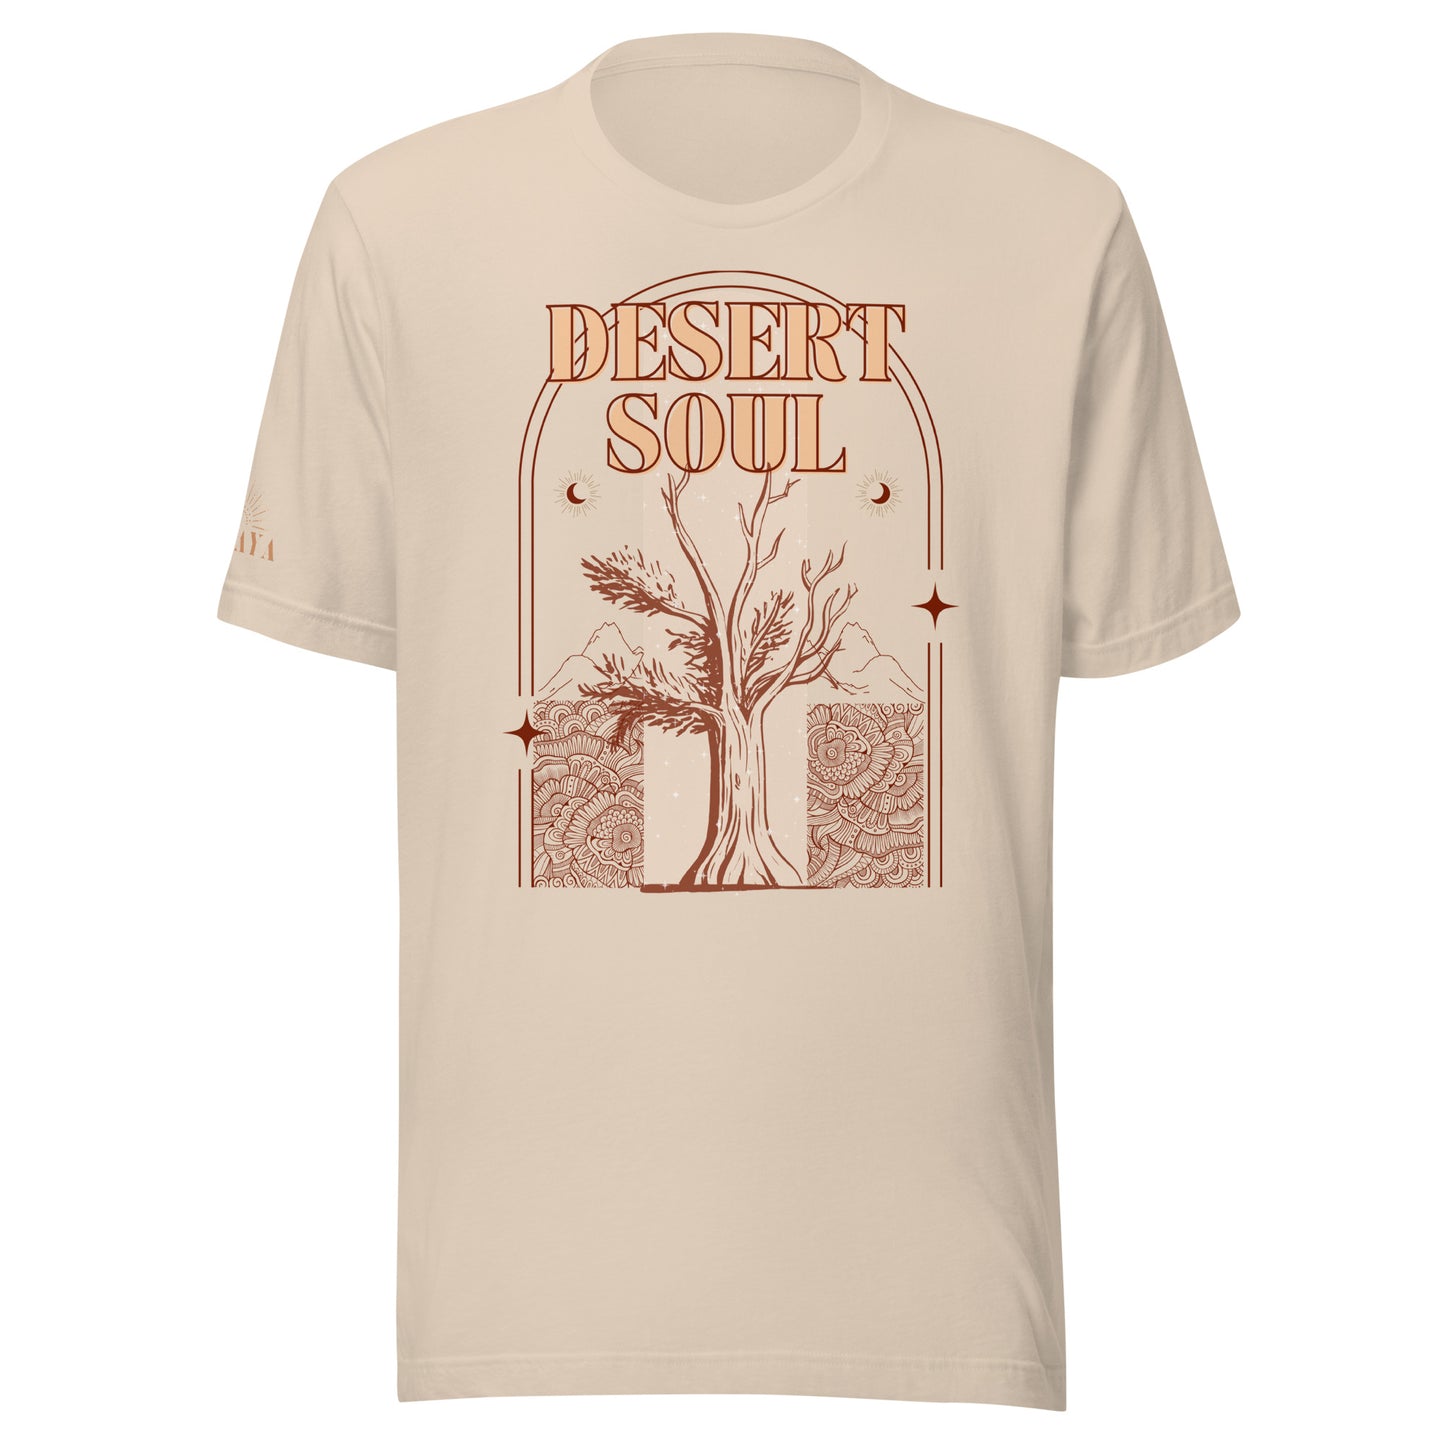 DESERT SOUL Unisex T-Shirt in Soft Cream - Front Graphic